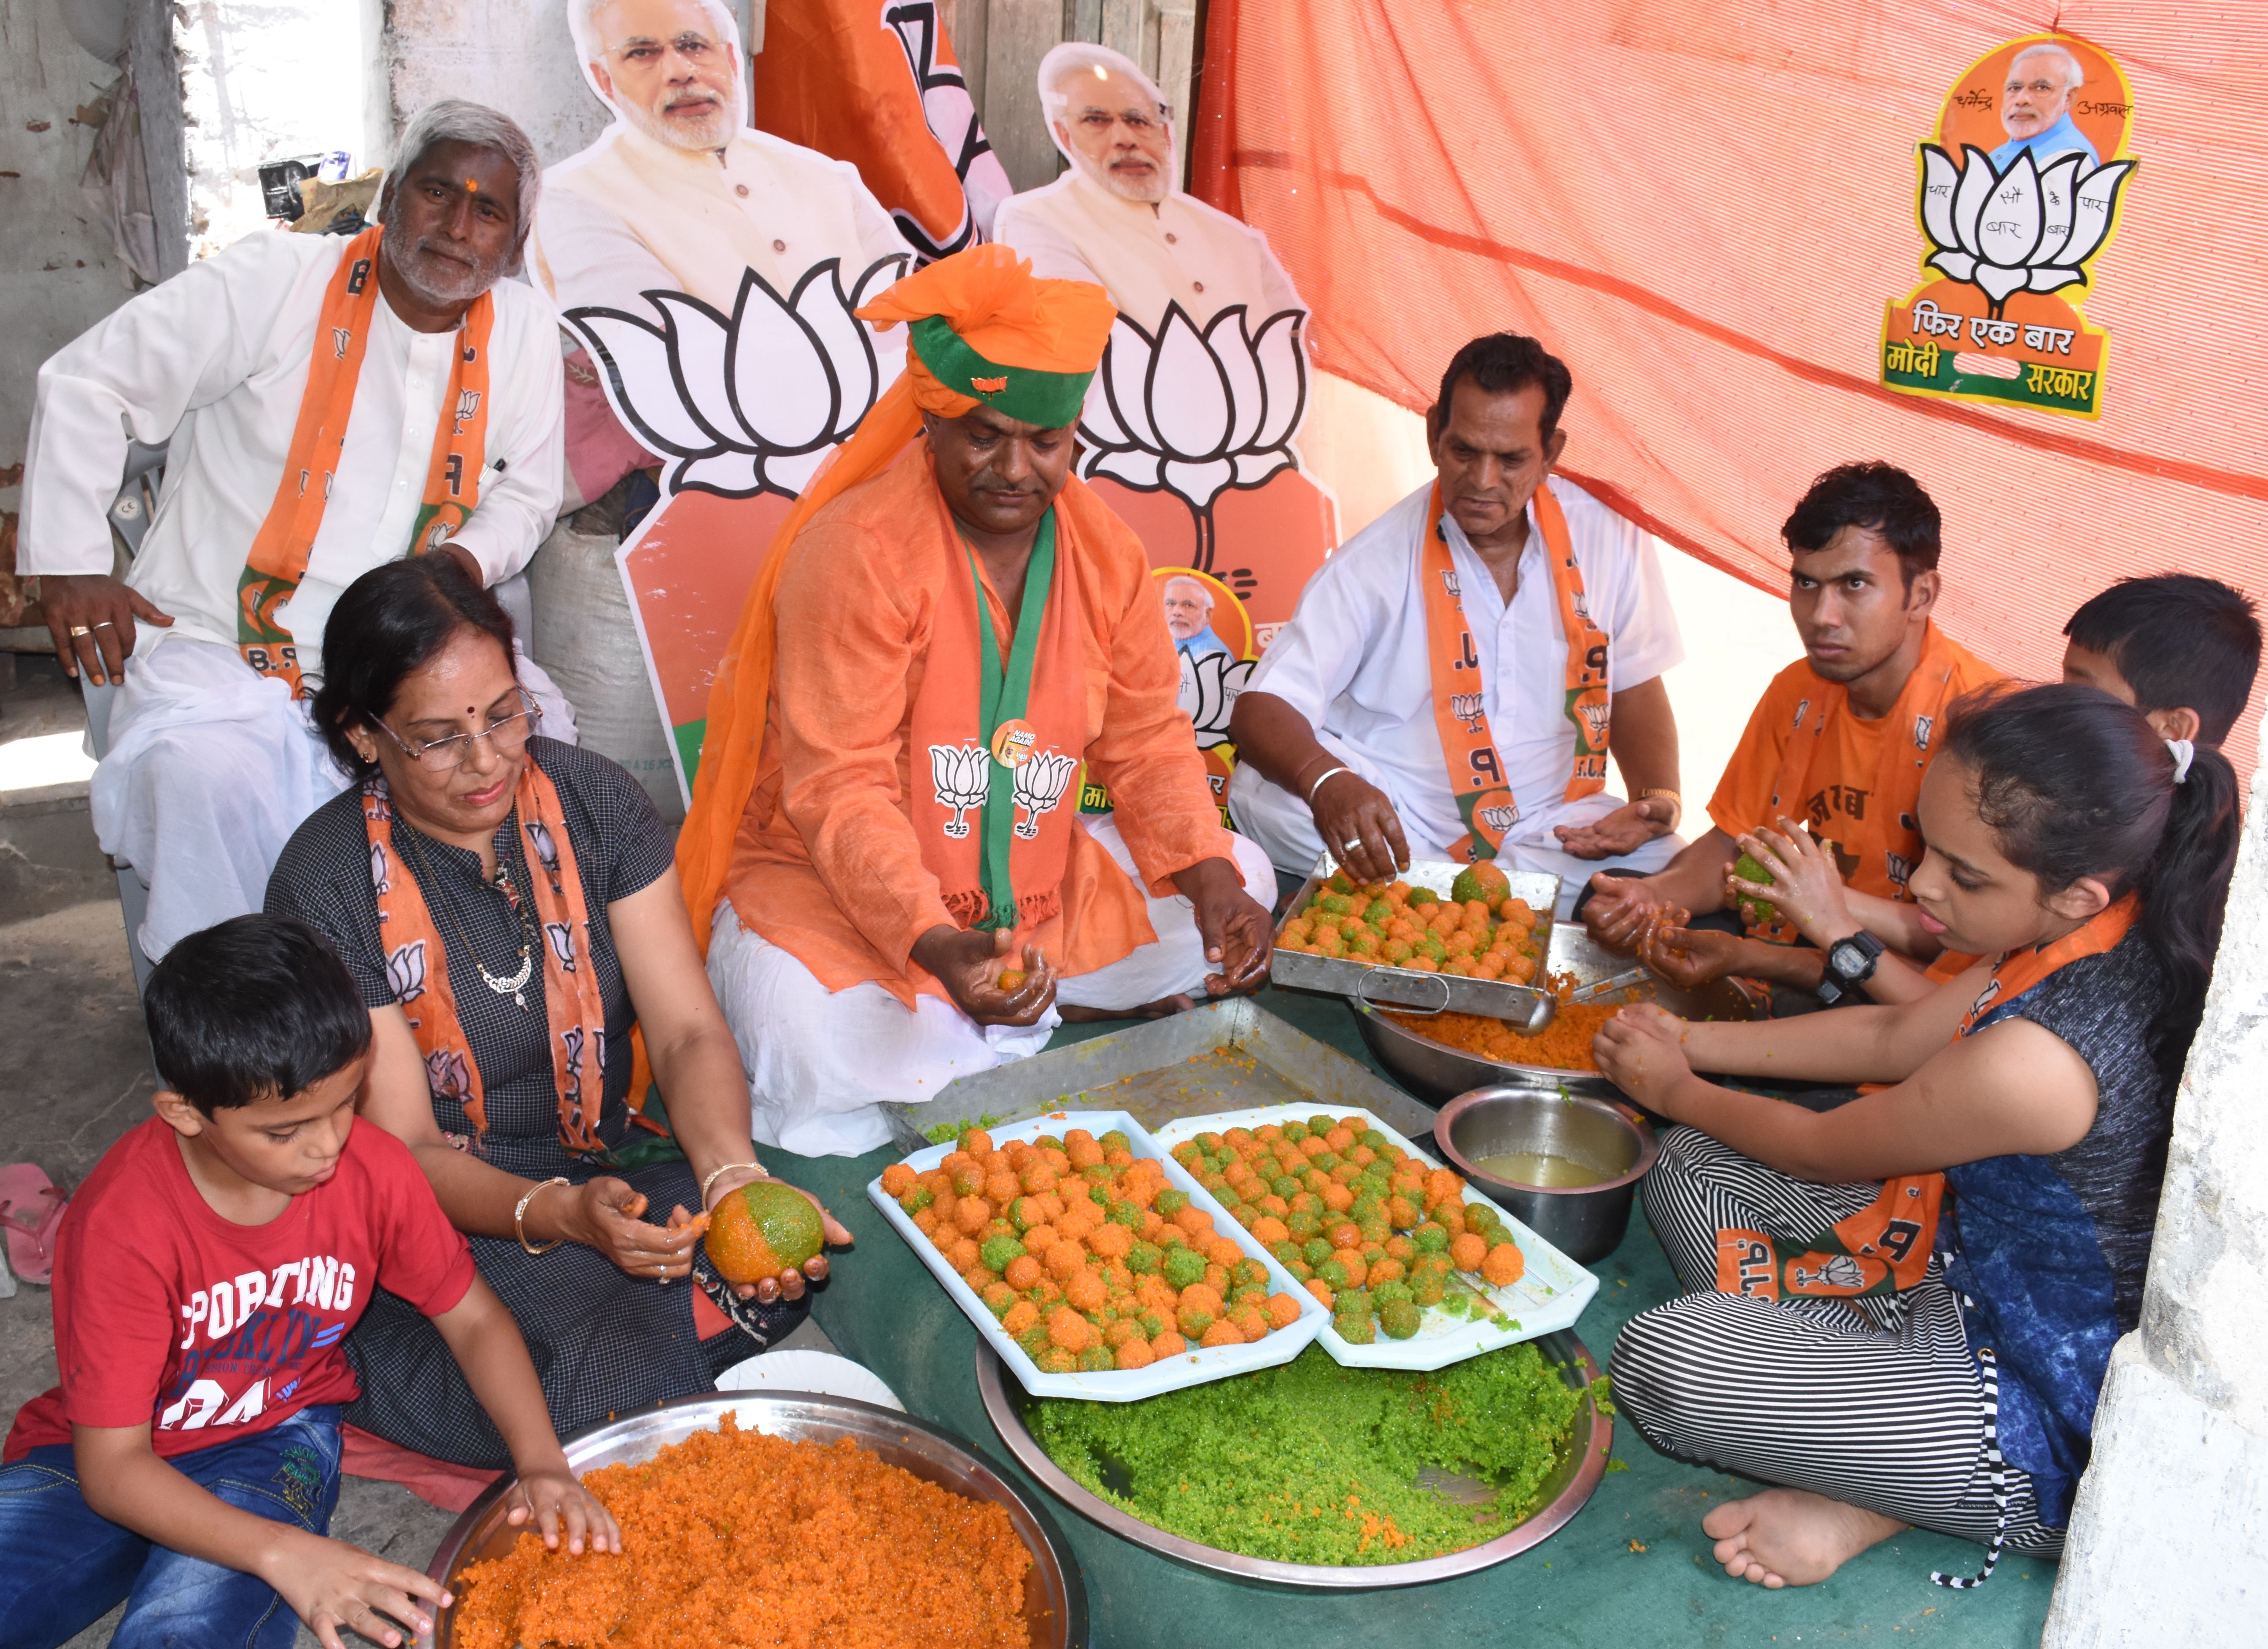 Rajasthan bikaner Loksabha Election 2019- BJP supporter confident